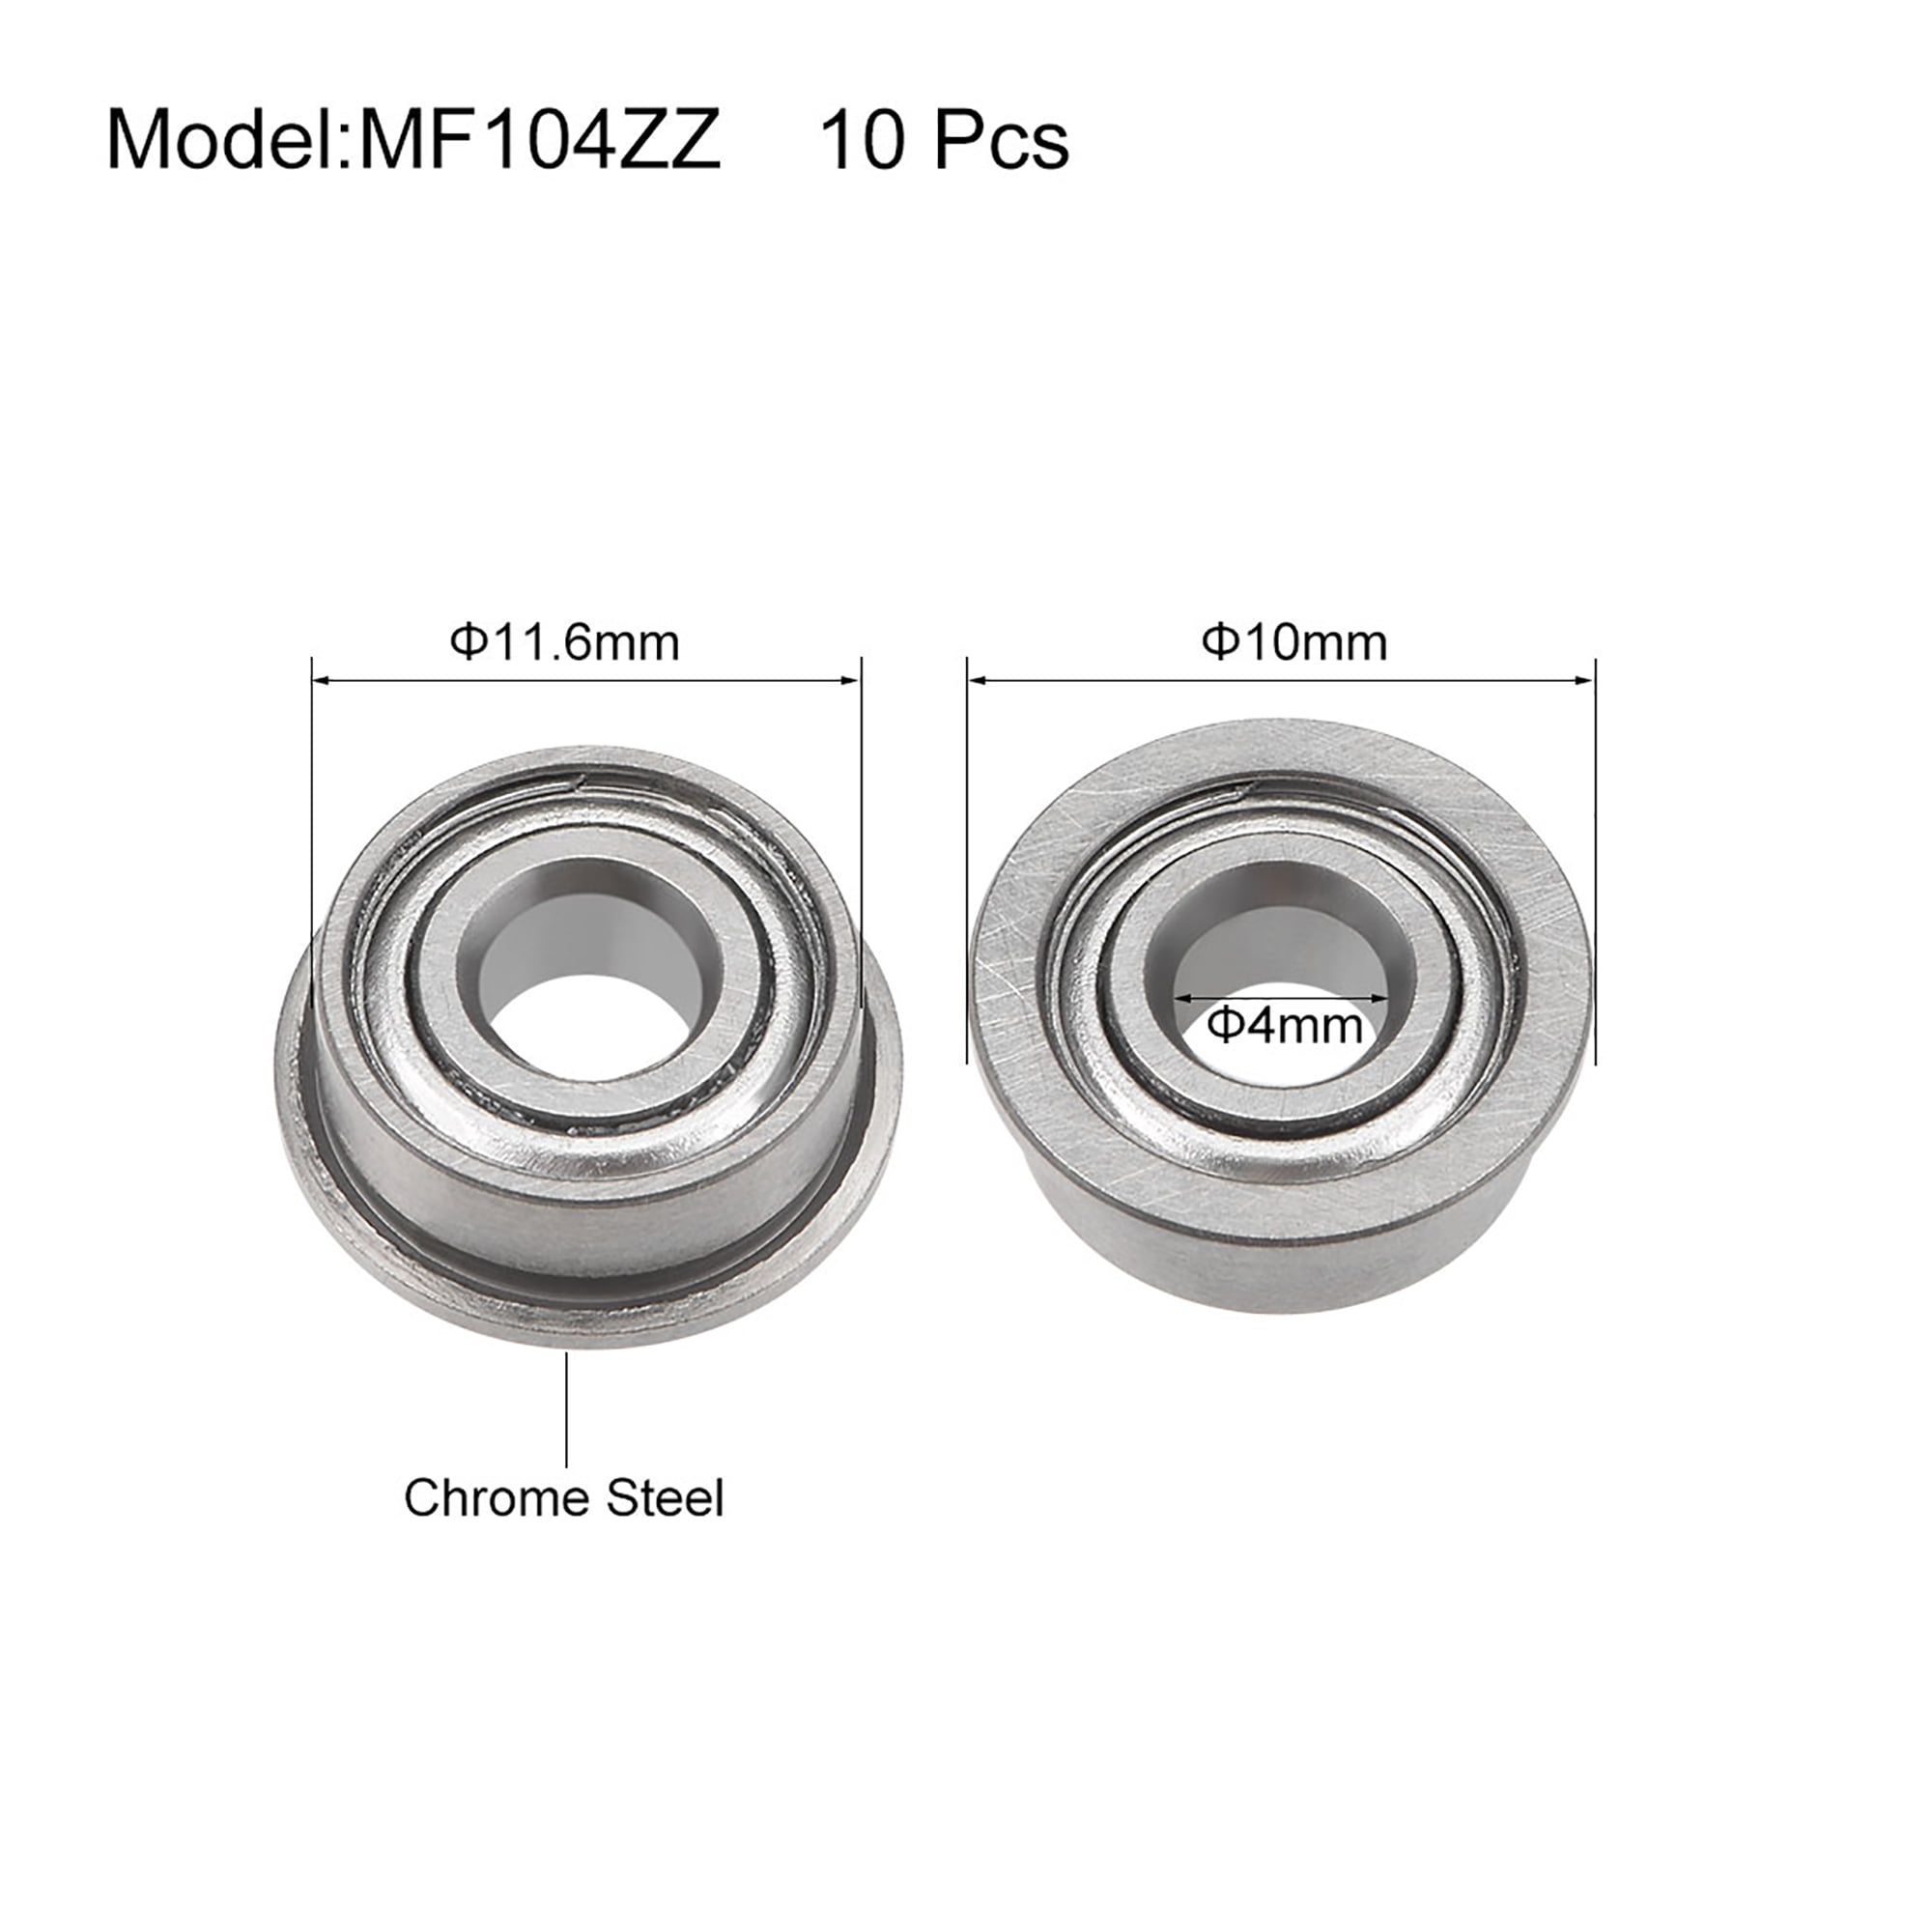 Flange Metal Double Shielded Ball Bearing 4*10*4 4x10x4 mm 10 PCS MF104zz 